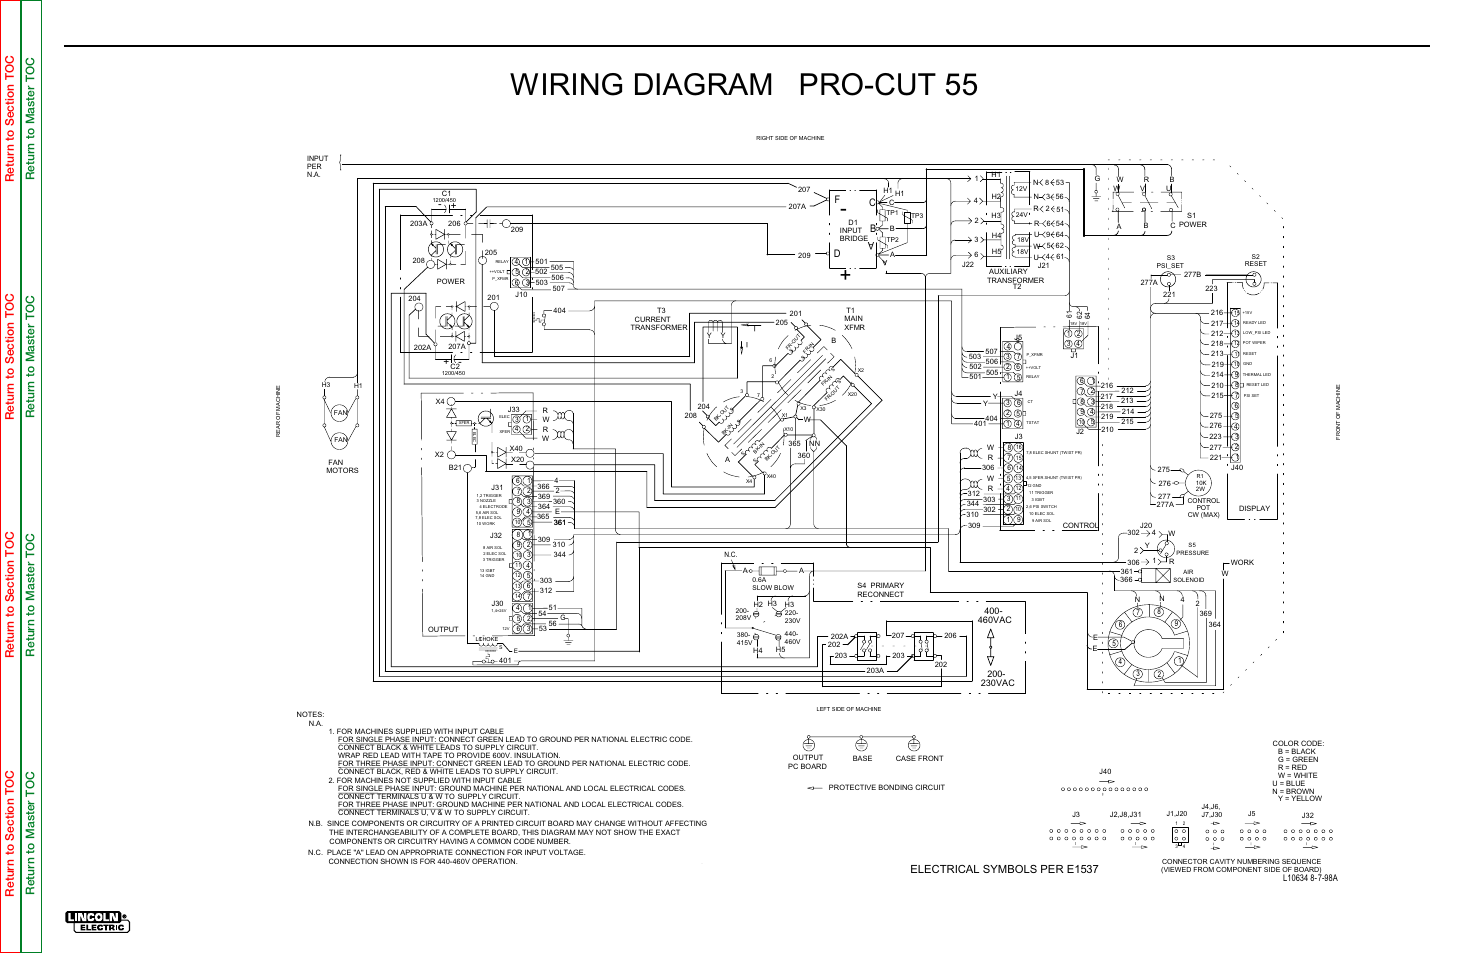 Wiring diagram pro-cut 55, Electrical diagrams, Wiring diagram - entire machine ...